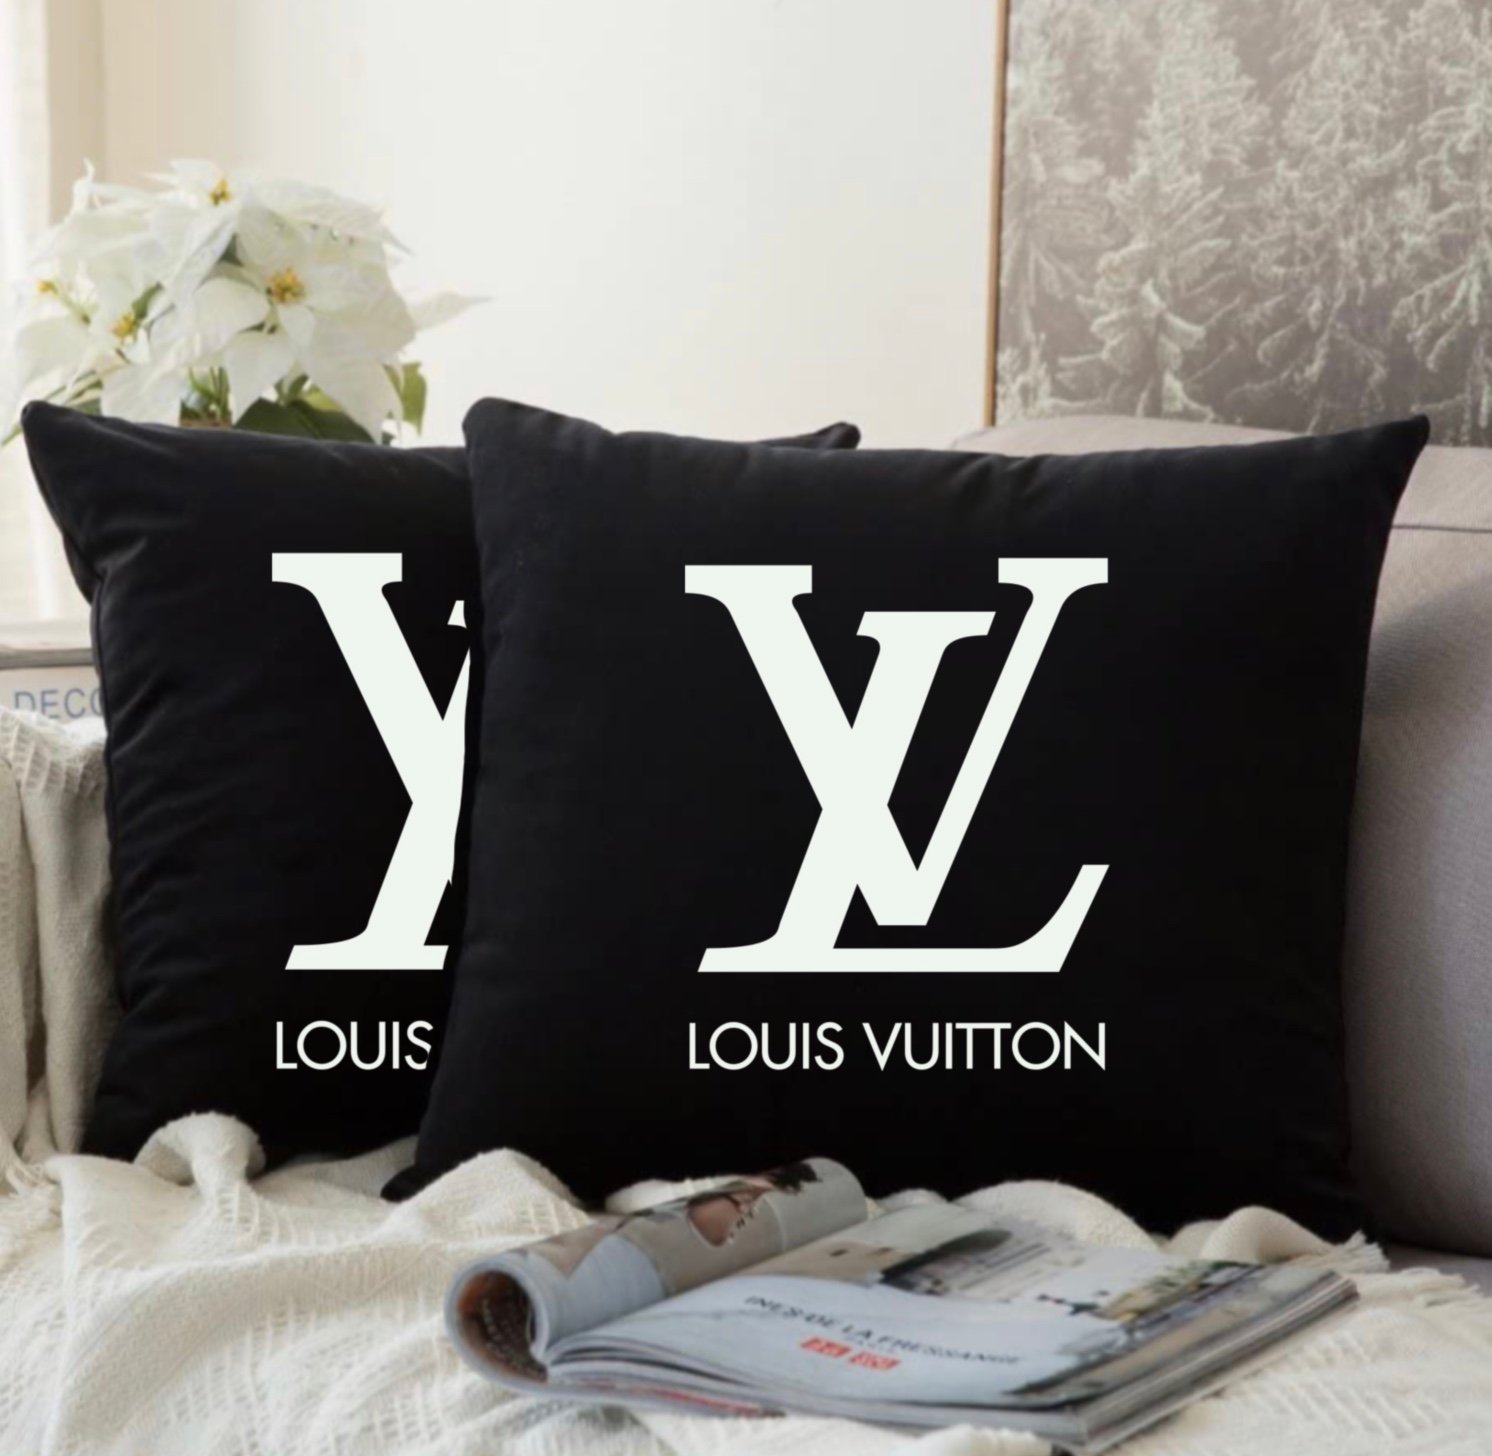 Louis Vuitton Inspired Pillow Cover Decorative Pillow Black White